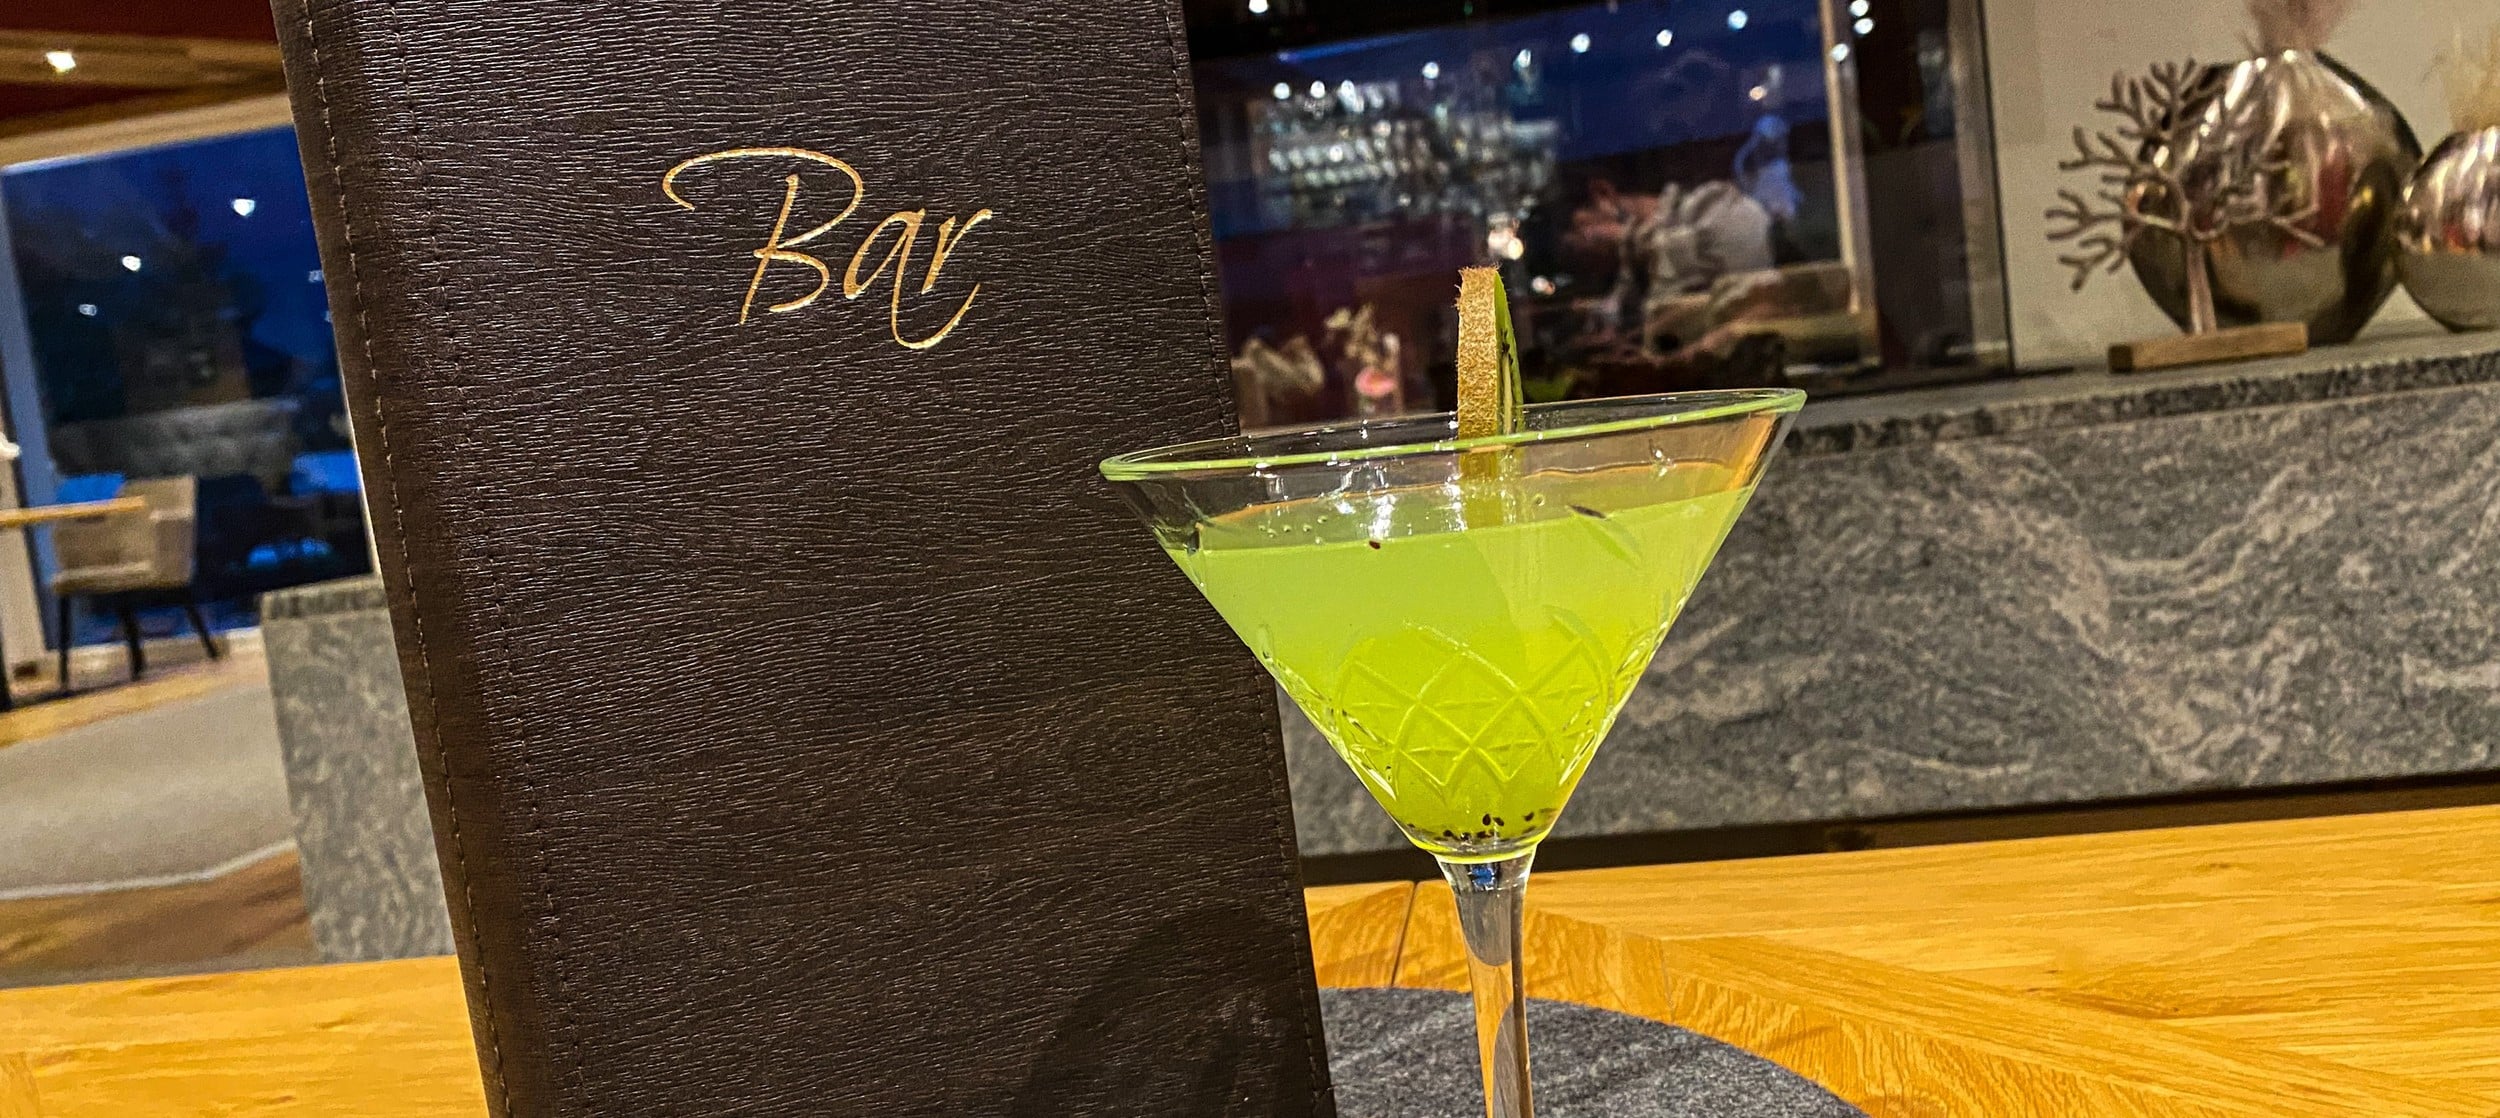 The grass-green drink - Kiwi Martini